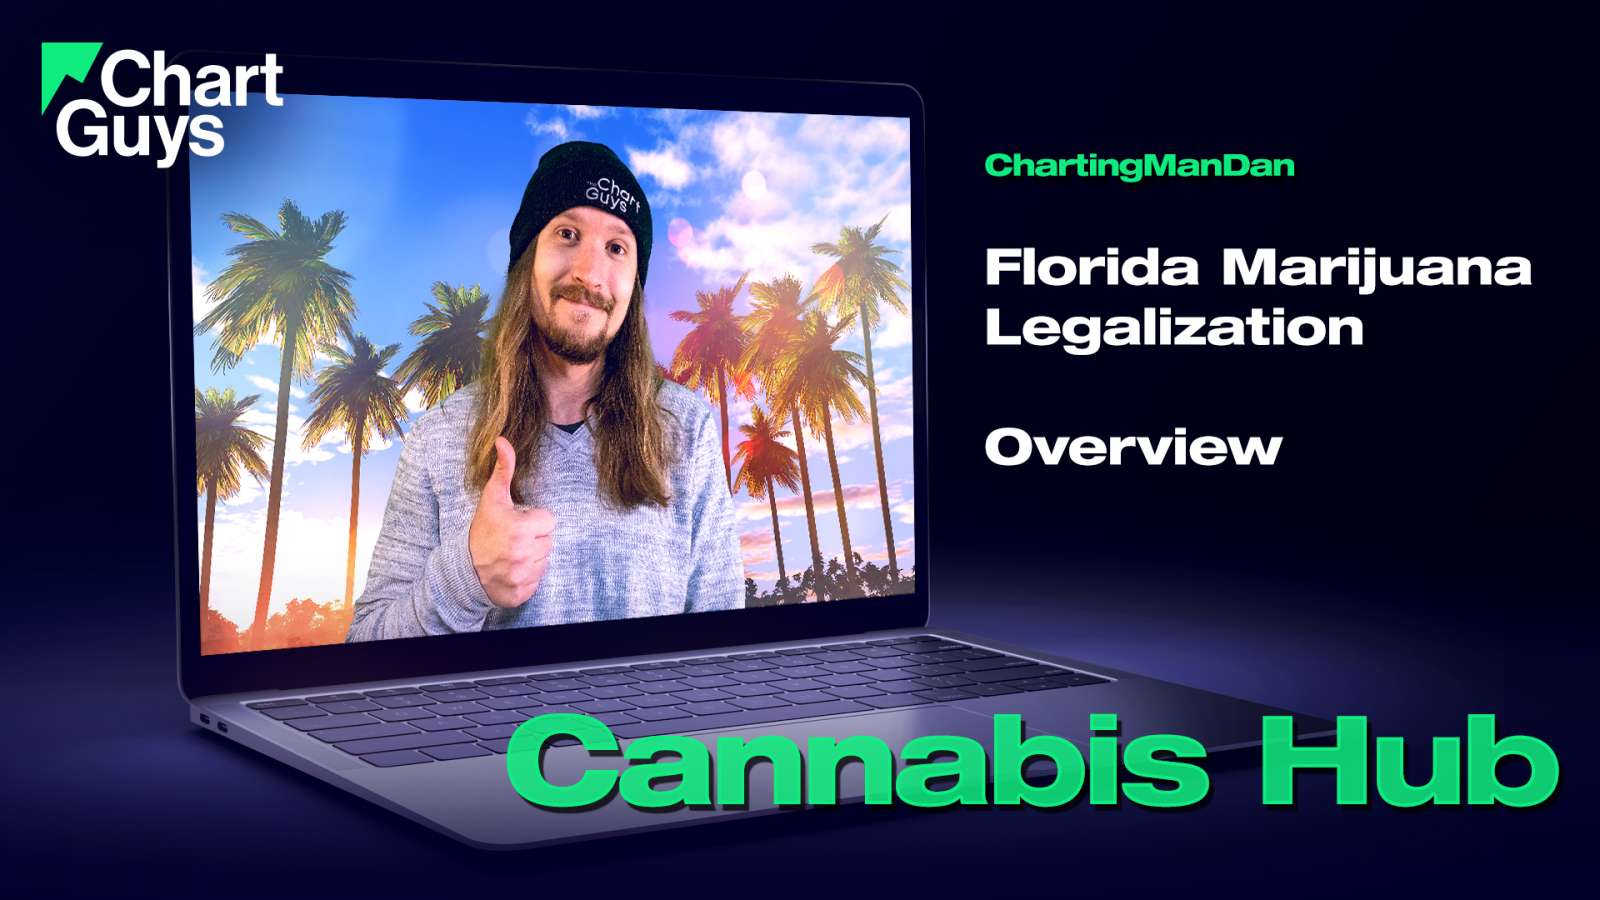 Florida Marijuana Legalization - Overview